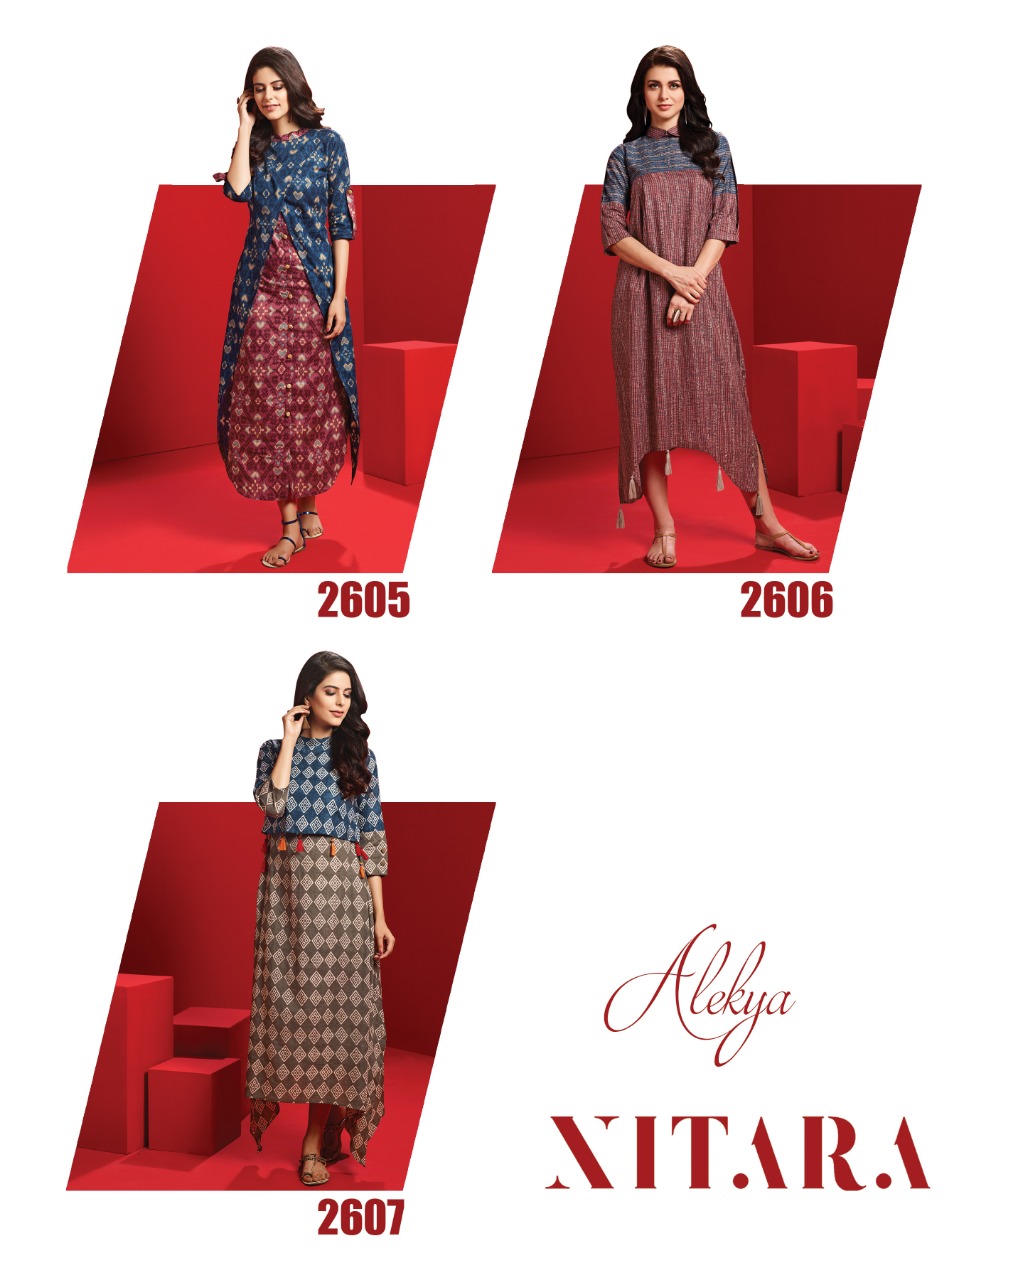 Nitara launch alekhya Casual with new Prints patterns kurtis concept